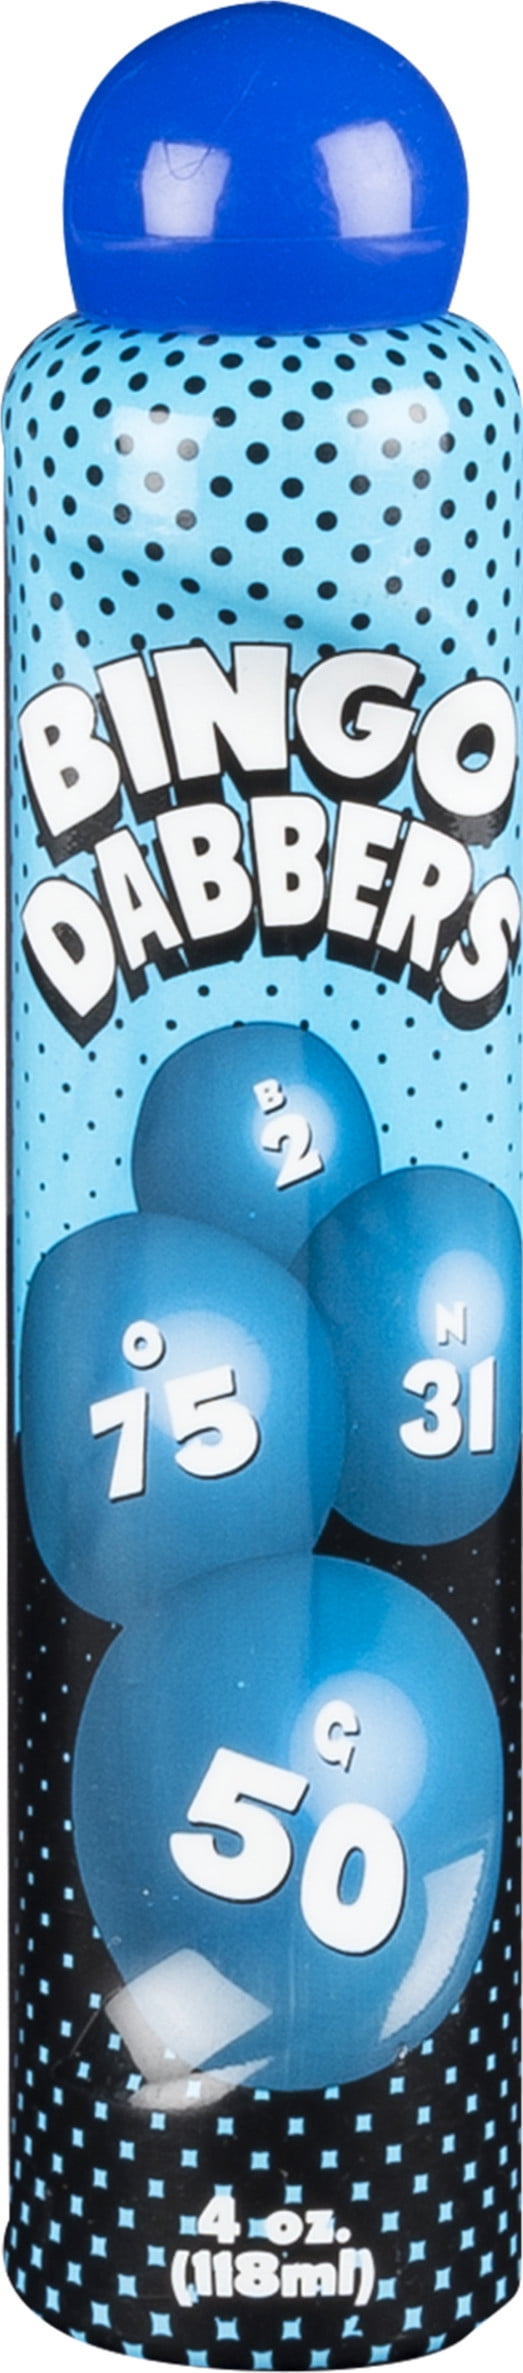 Bingo Dabber - Blue 4 oz